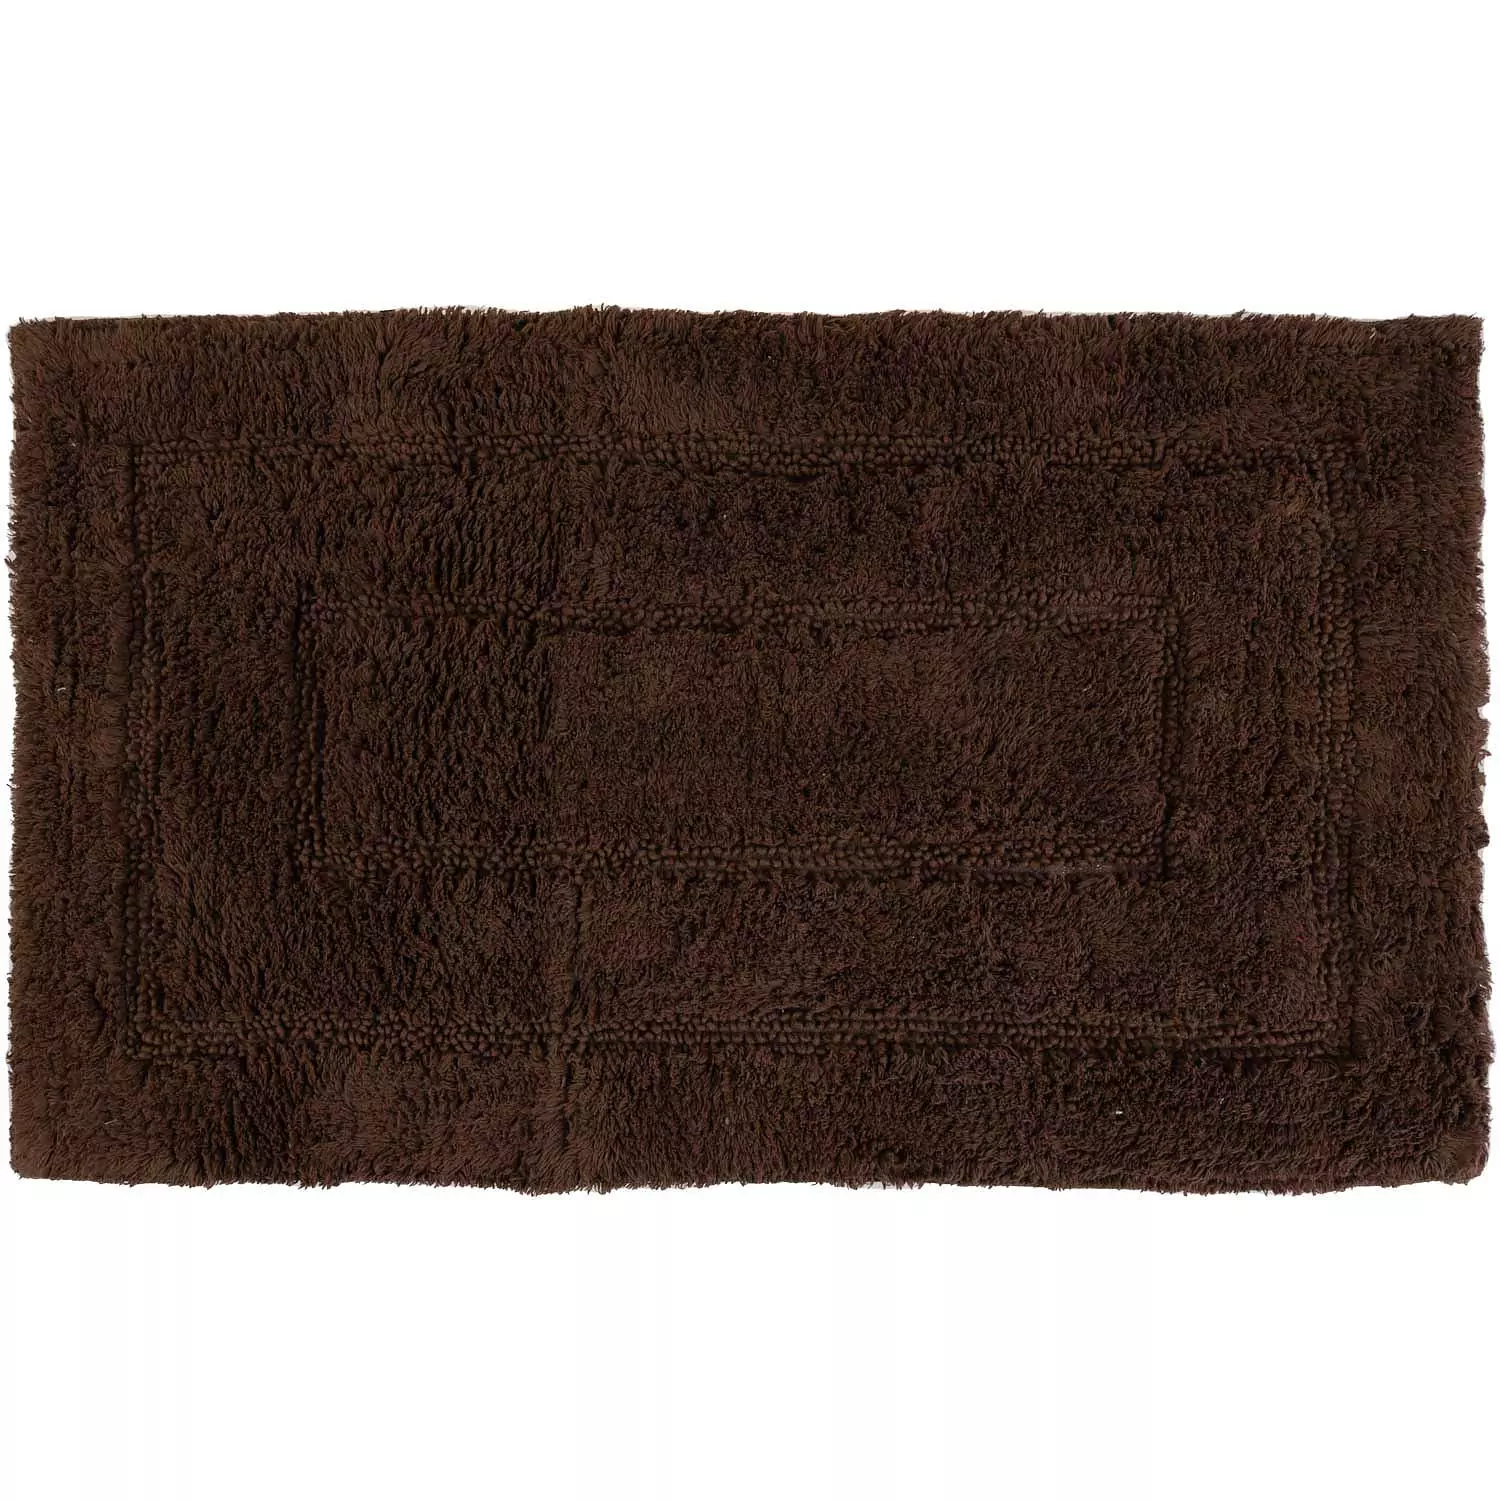 Zen -Bath mat, rectangle pattern, 18" x 30", brown